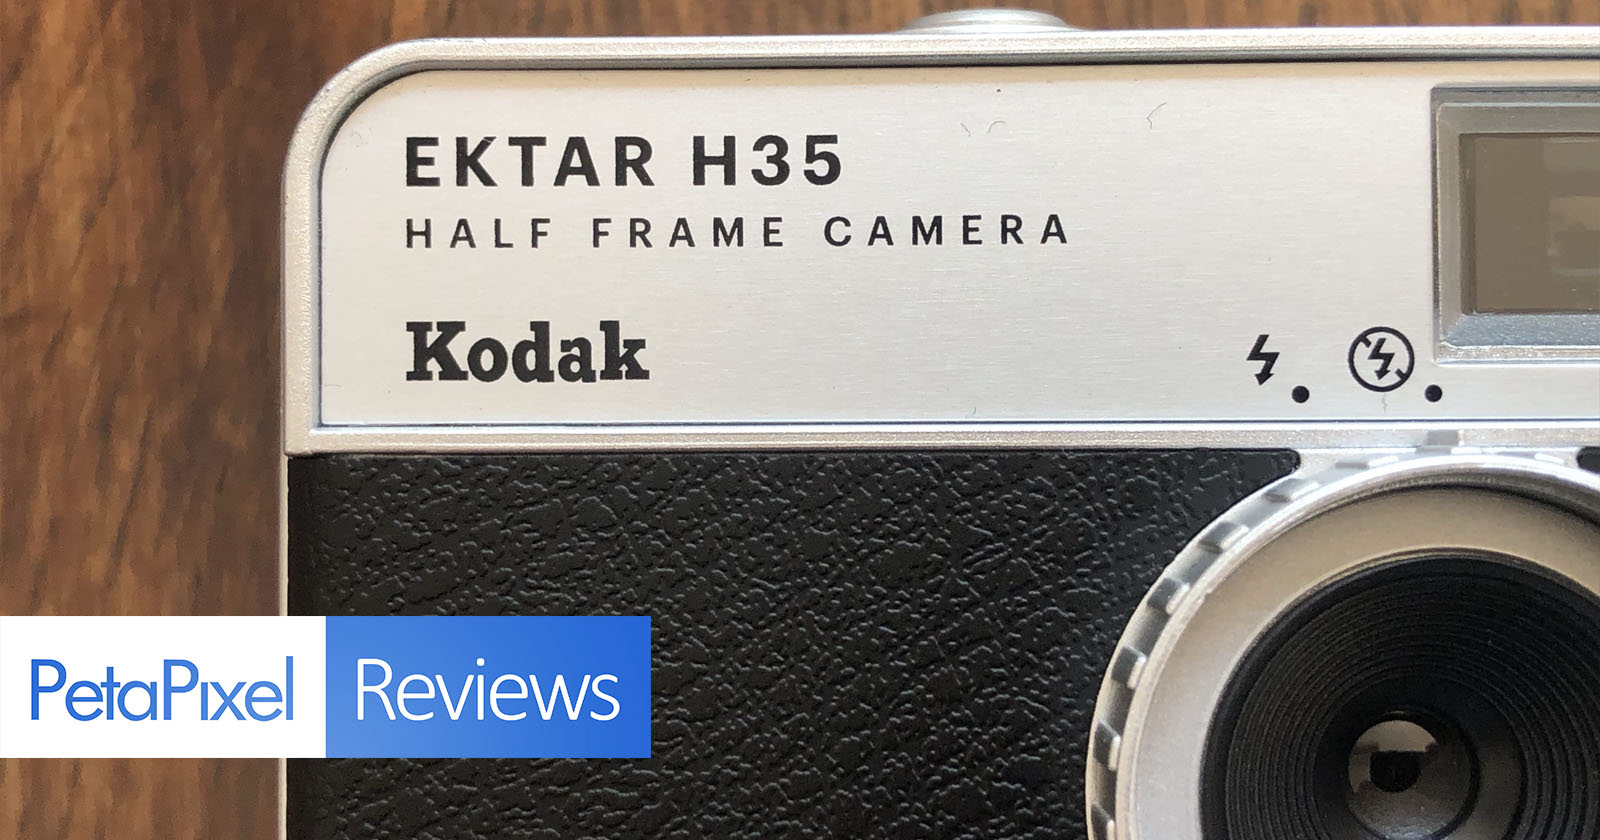 Kodak Ektar H35 Half Frame 35mm Film Camera - Black